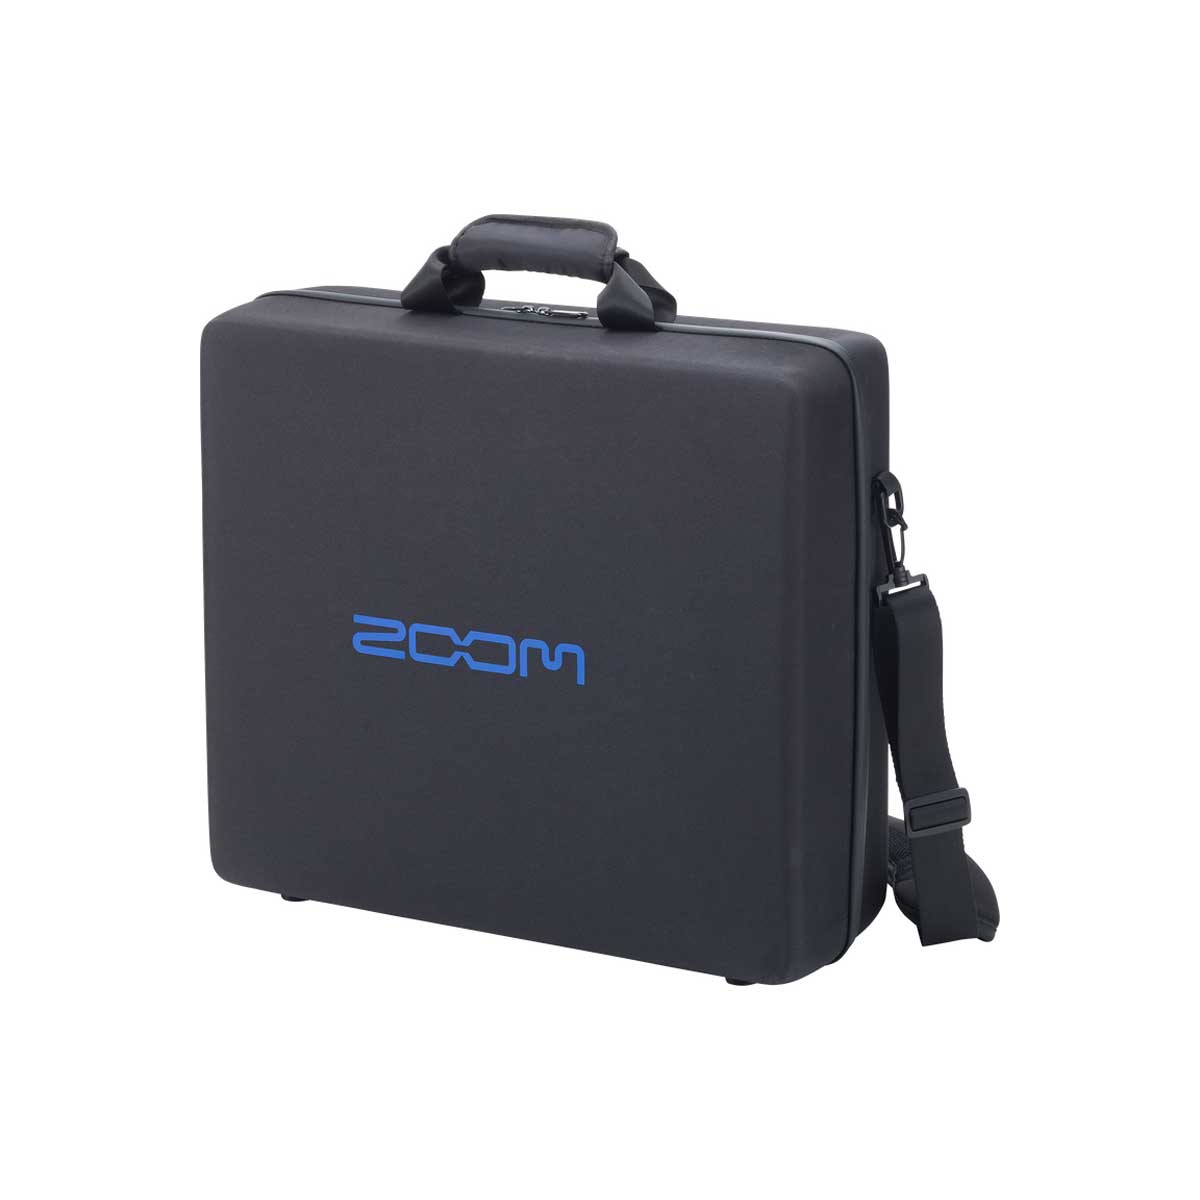 Zoom CBL-20 Carry Case for L20/L12